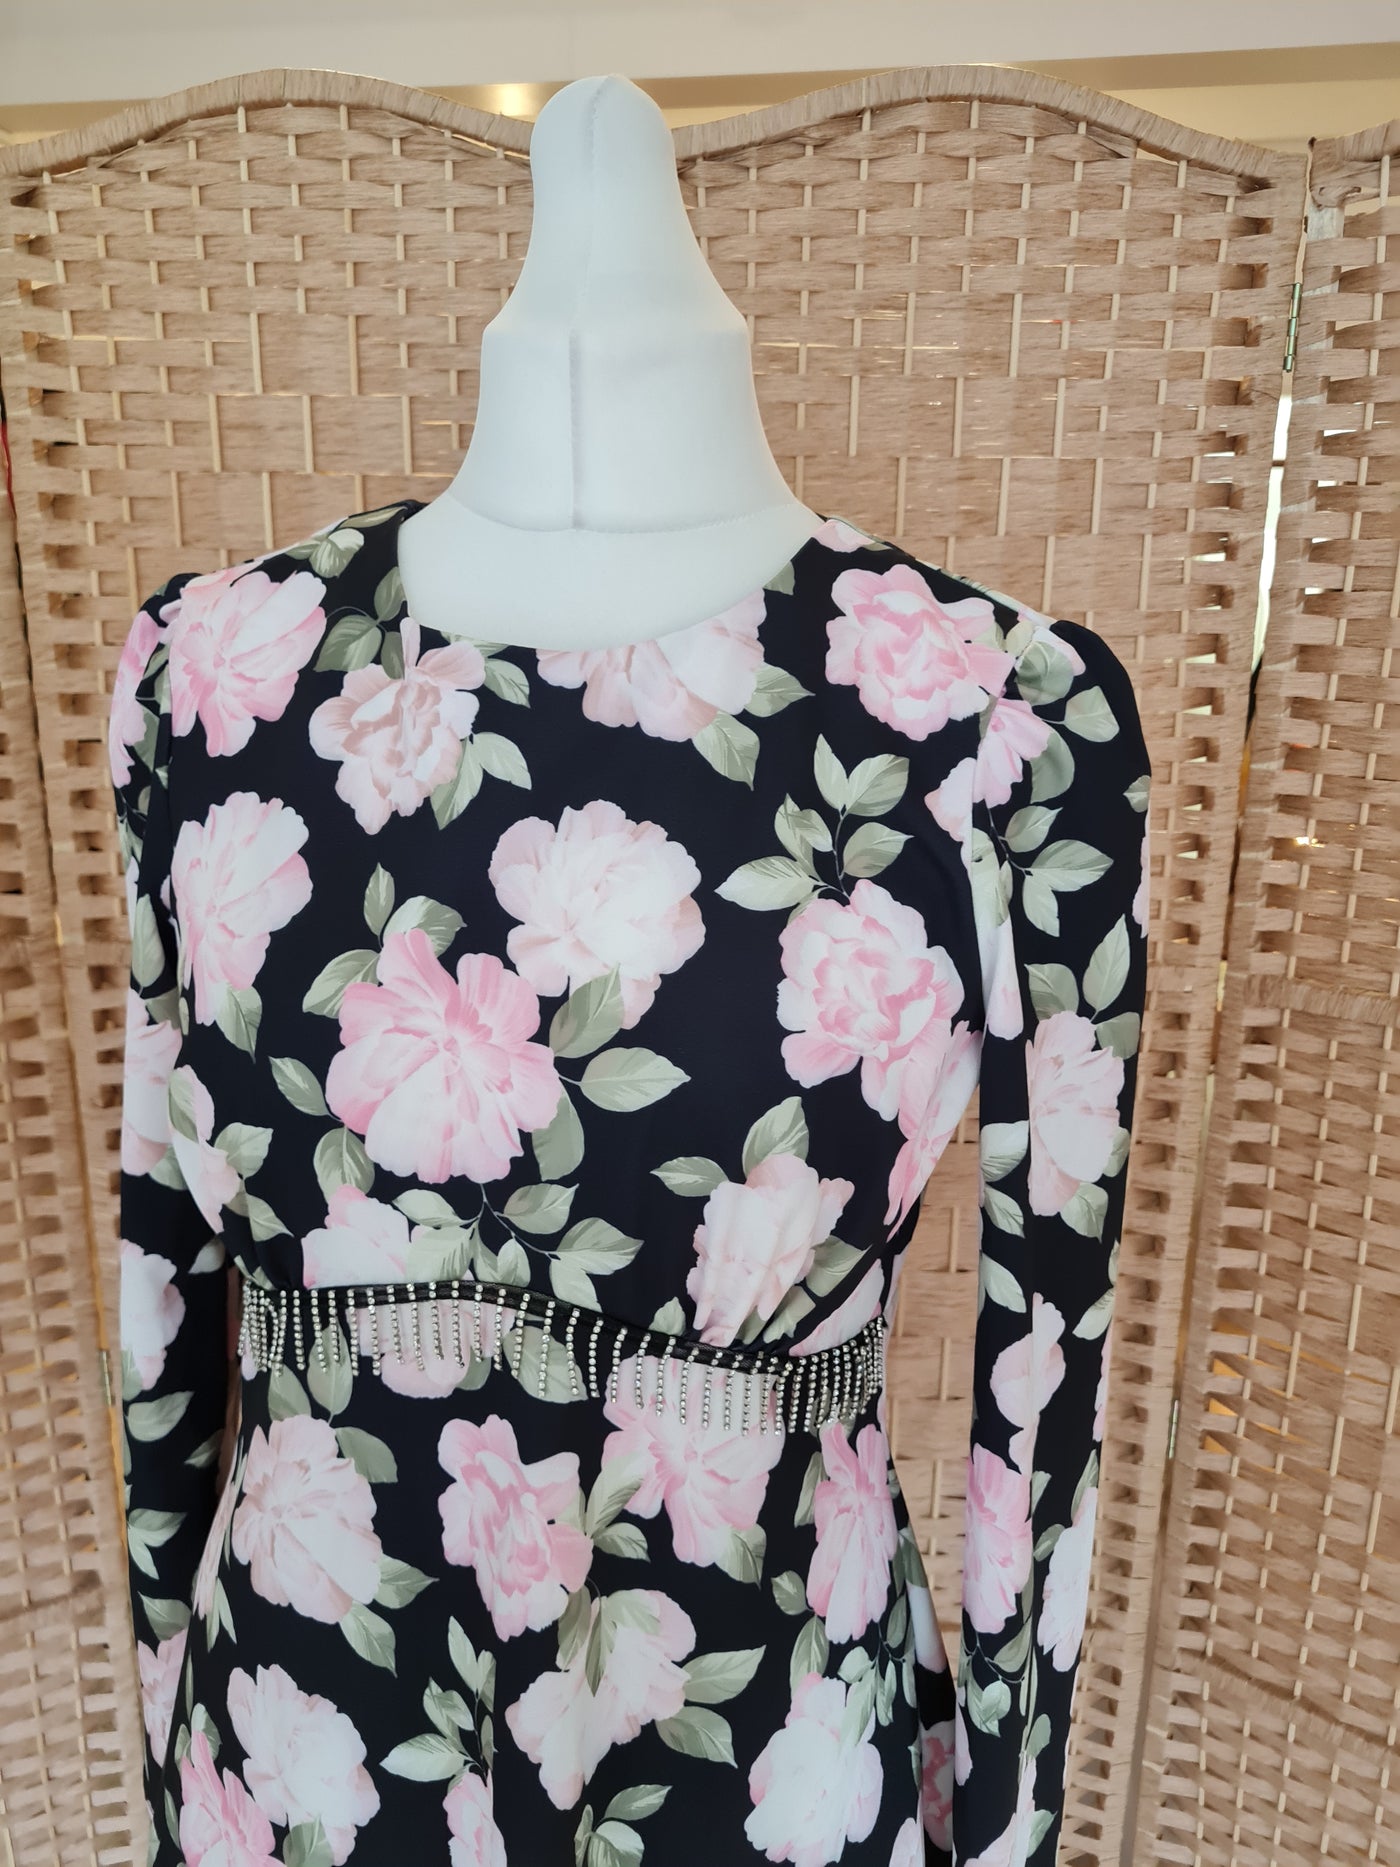 ASOS Pink/Black Floral Dress Size 14 NWT